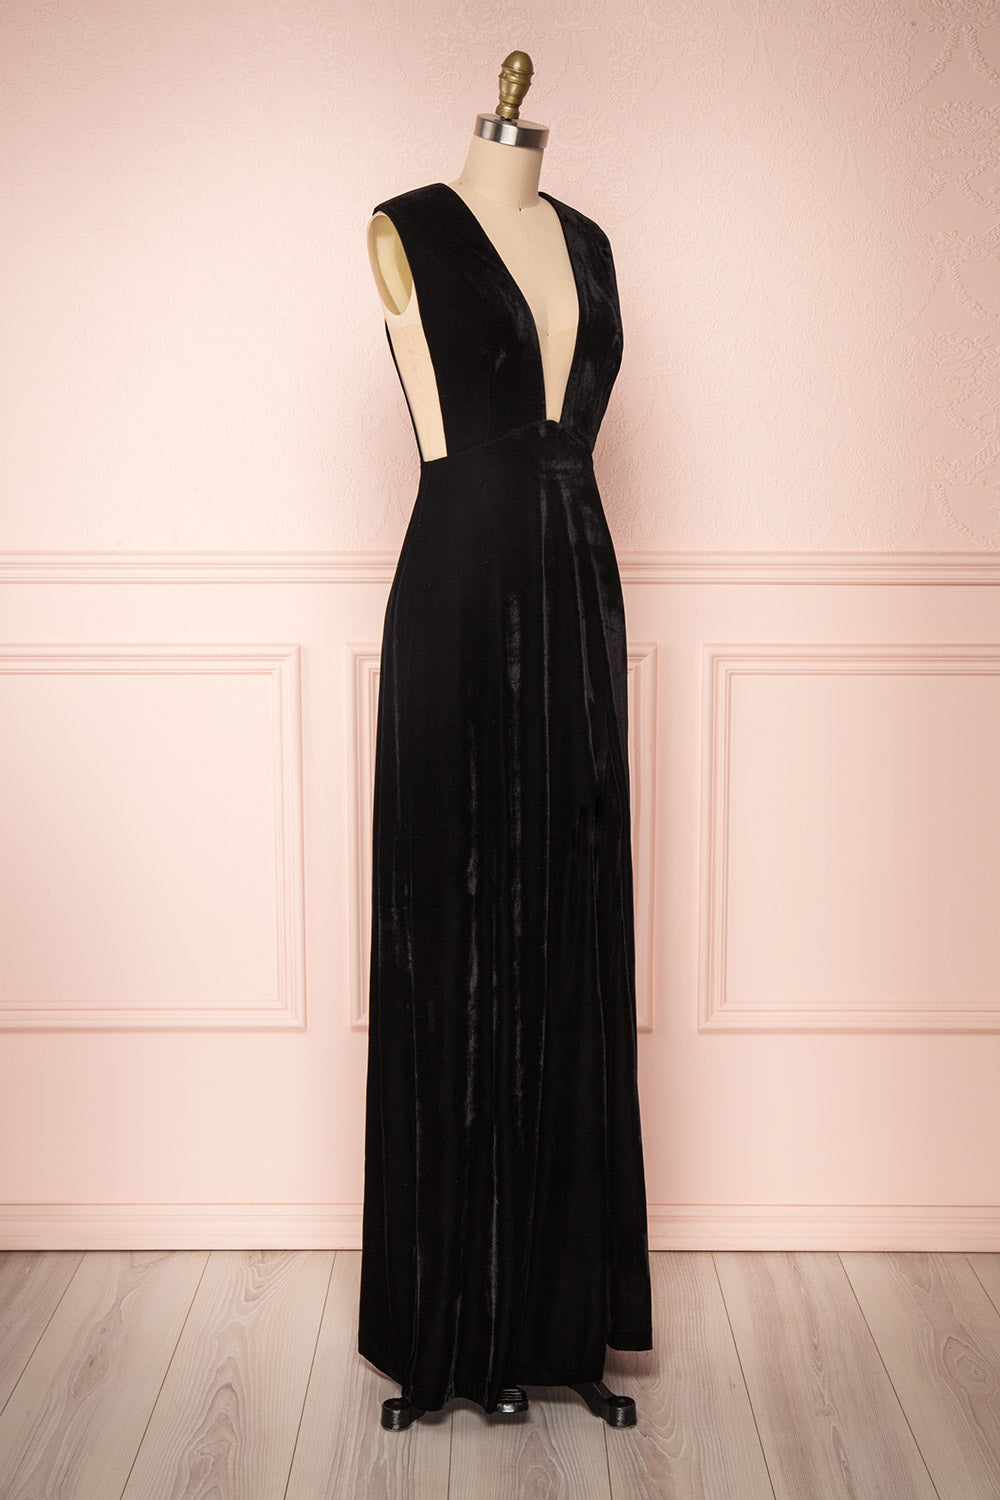 Eileen Black Velvet A-Line Gown | Boutique 1861 side view 